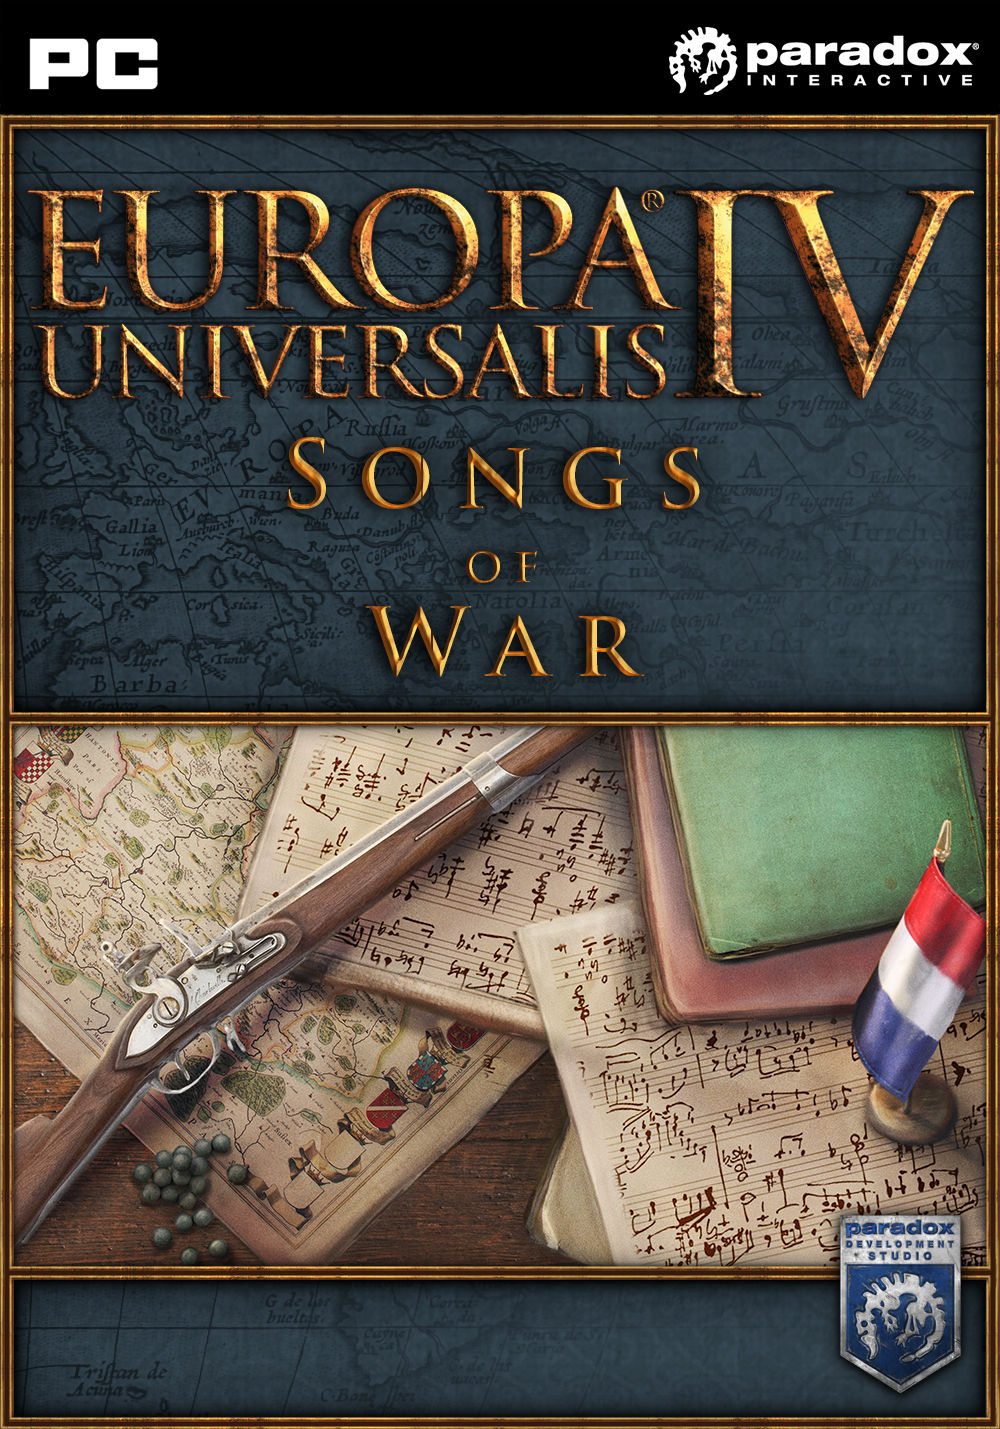 Europa Universalis IV: Songs of War